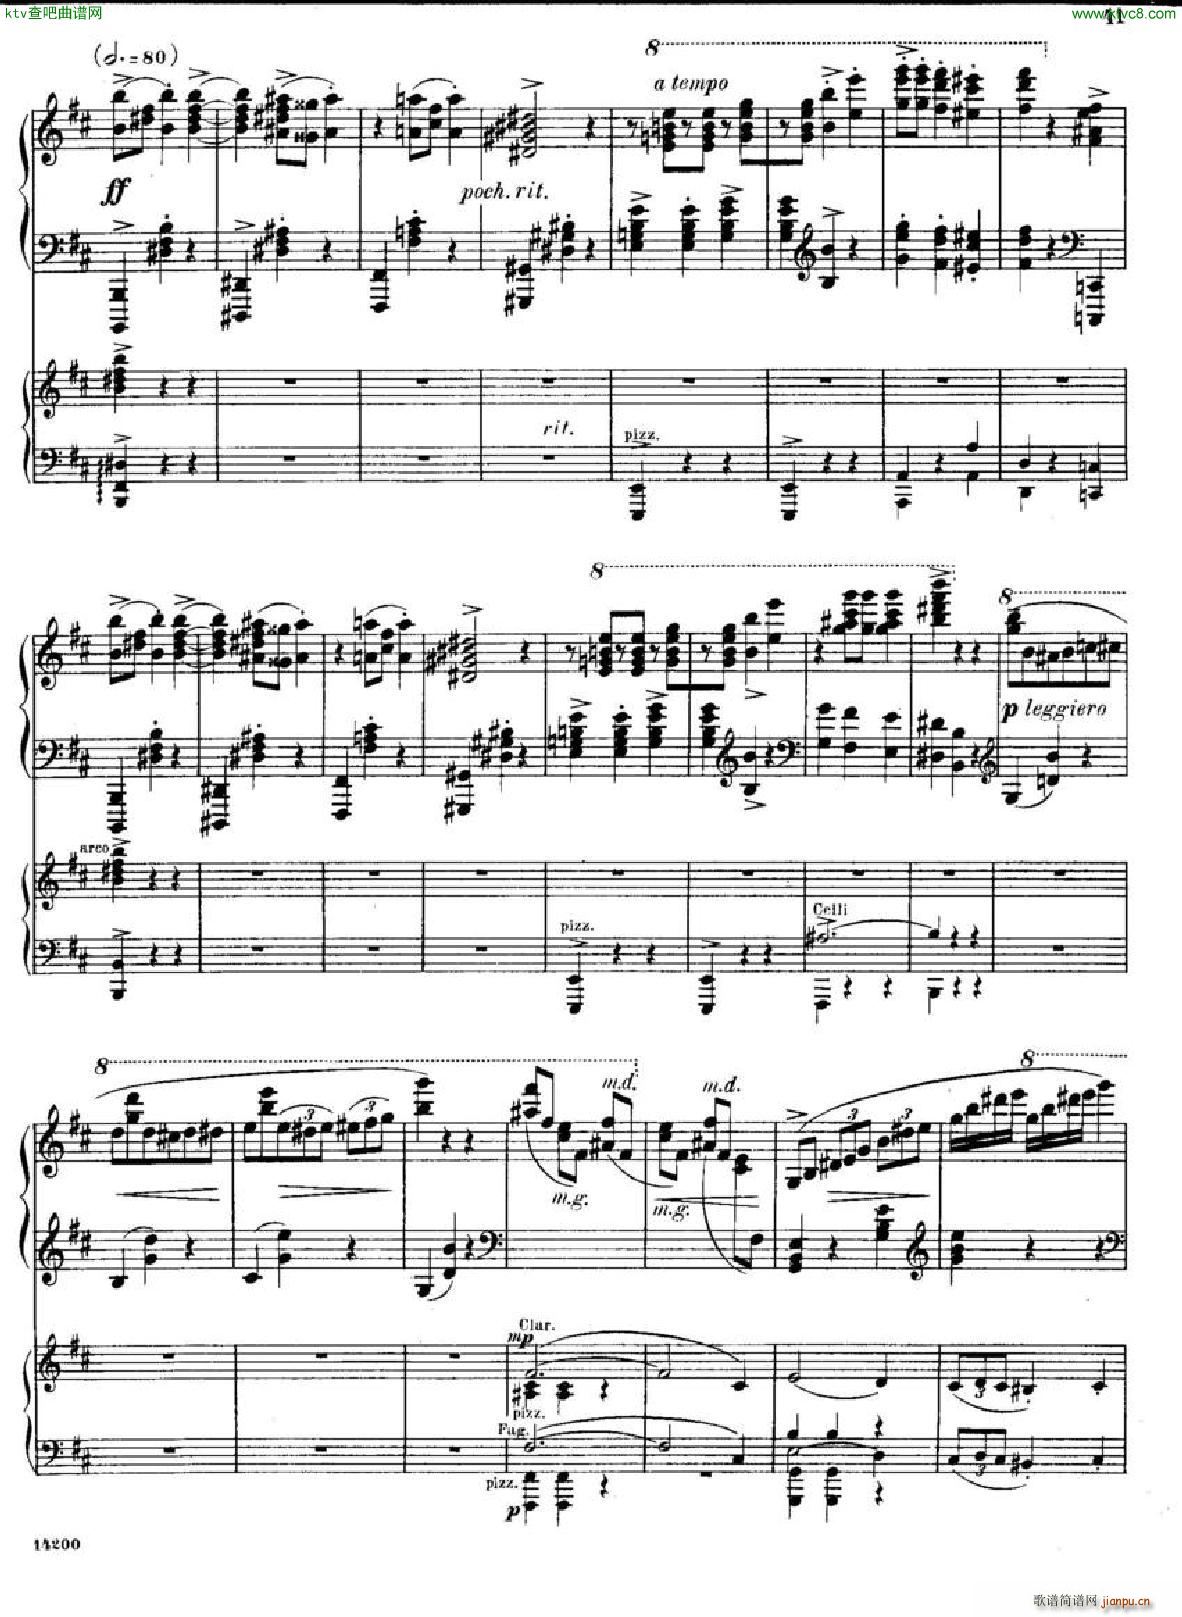 huss concerto part3()7